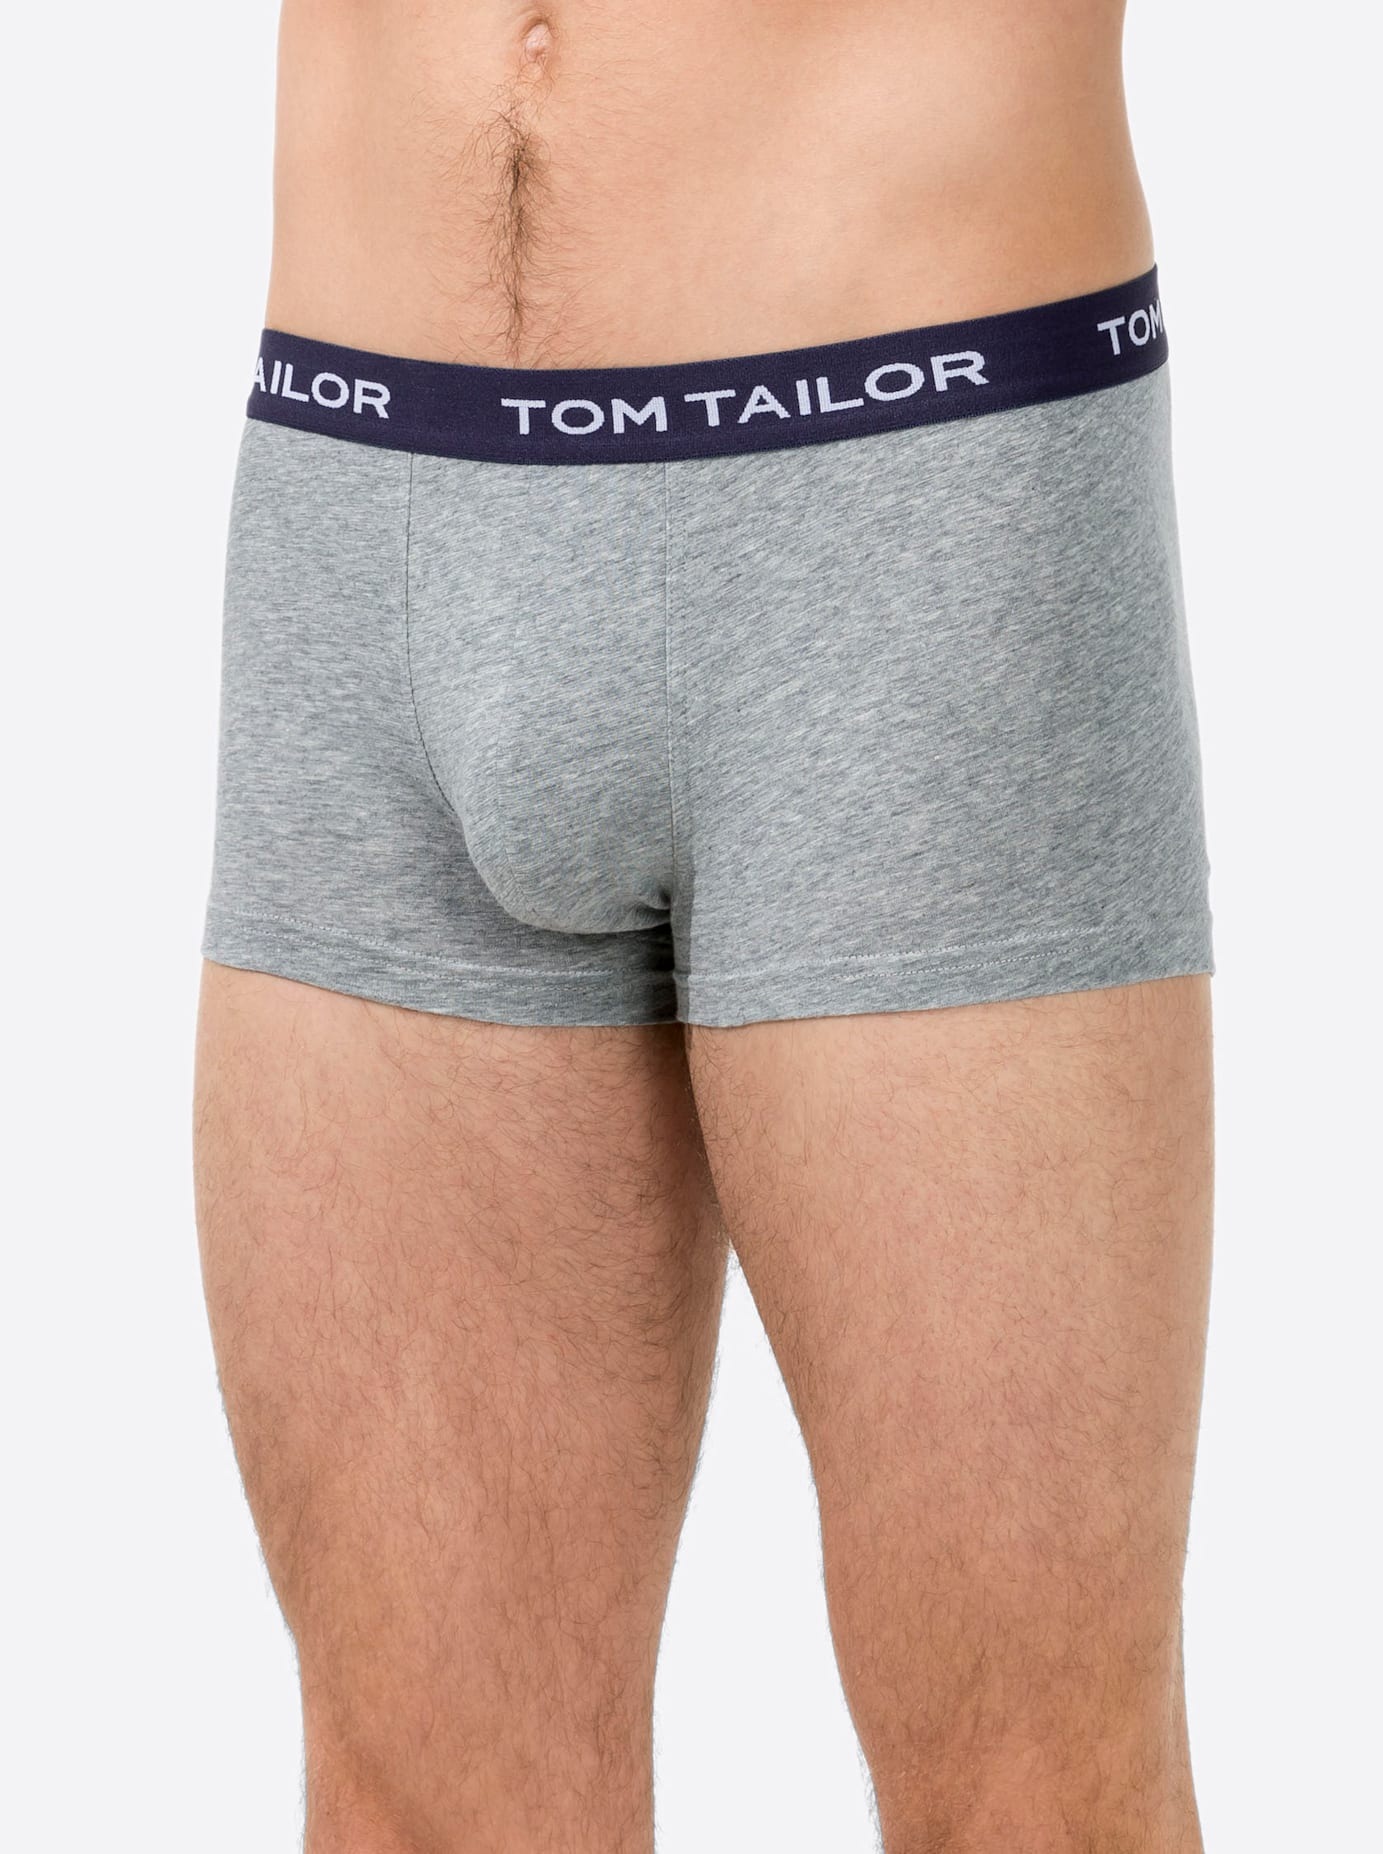 TOM TAILOR Panty, (3 St.)